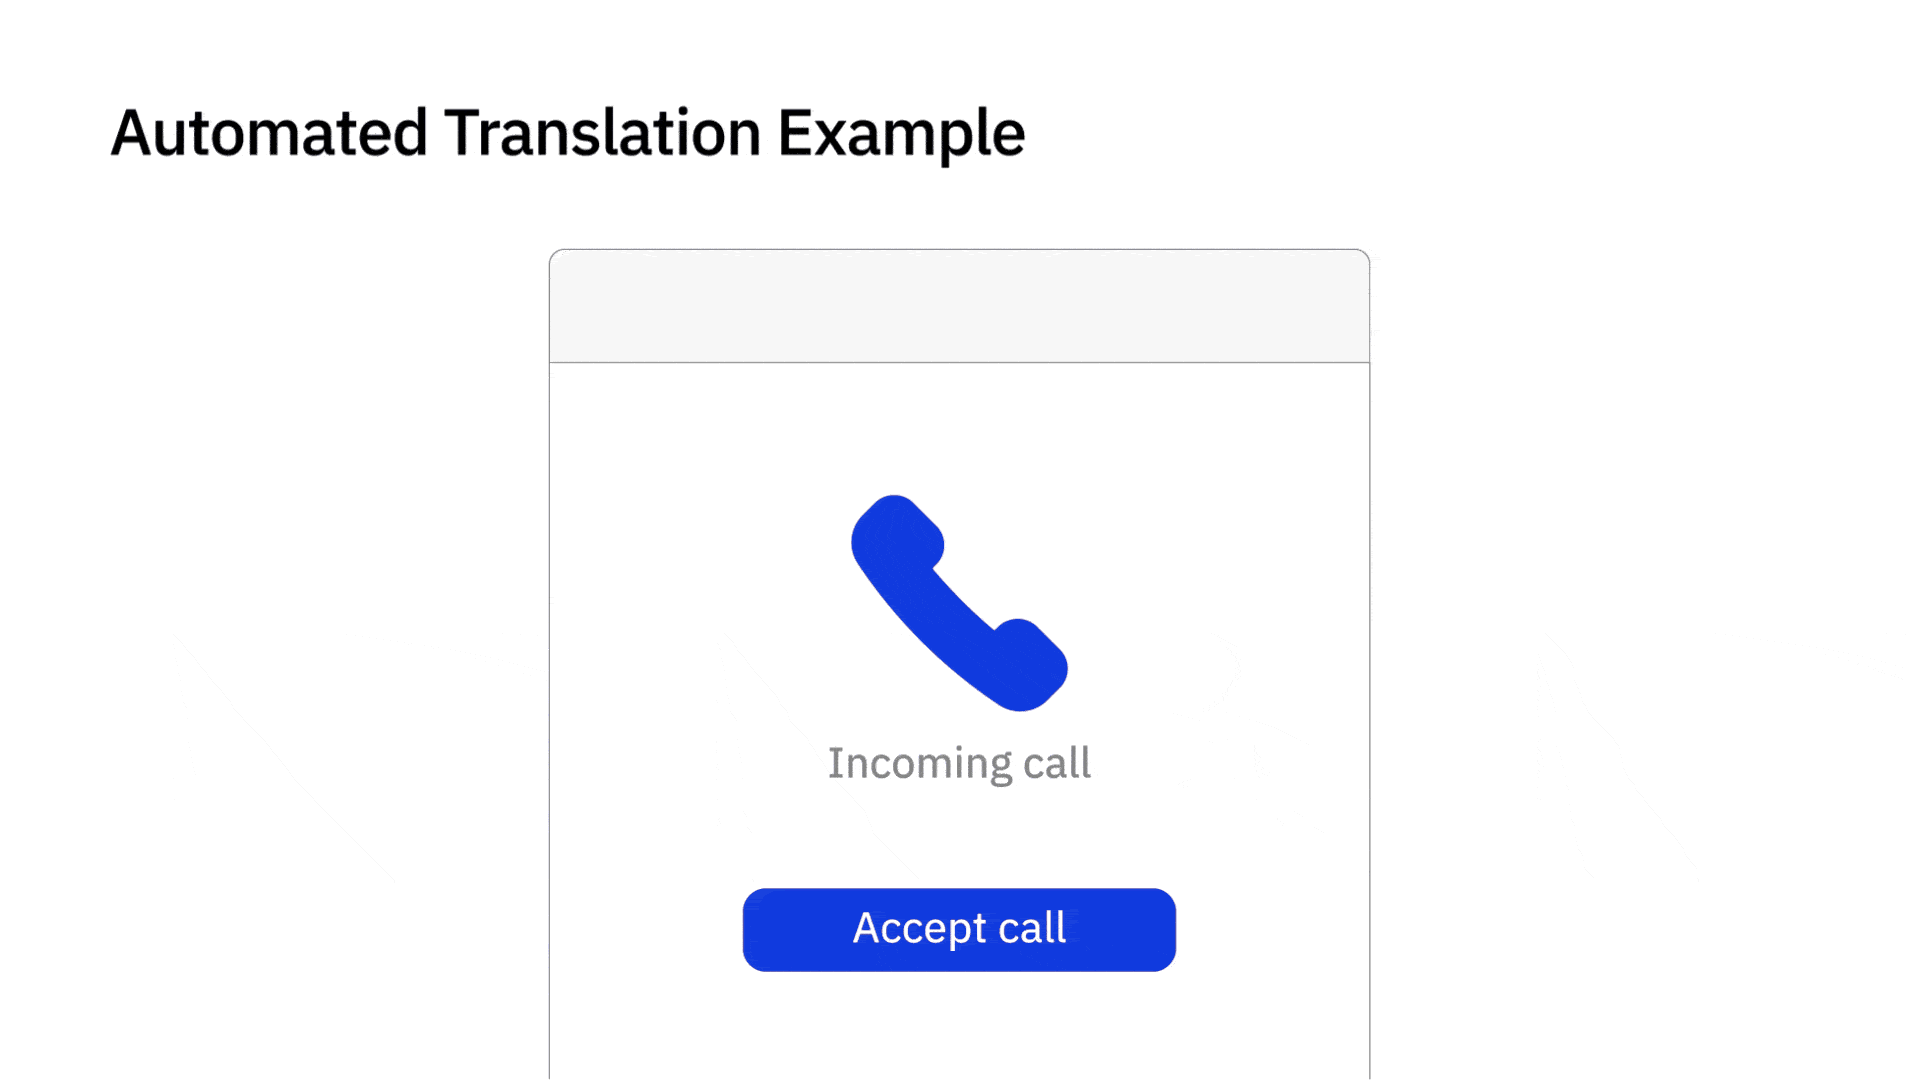 An animation of the translation process via voice